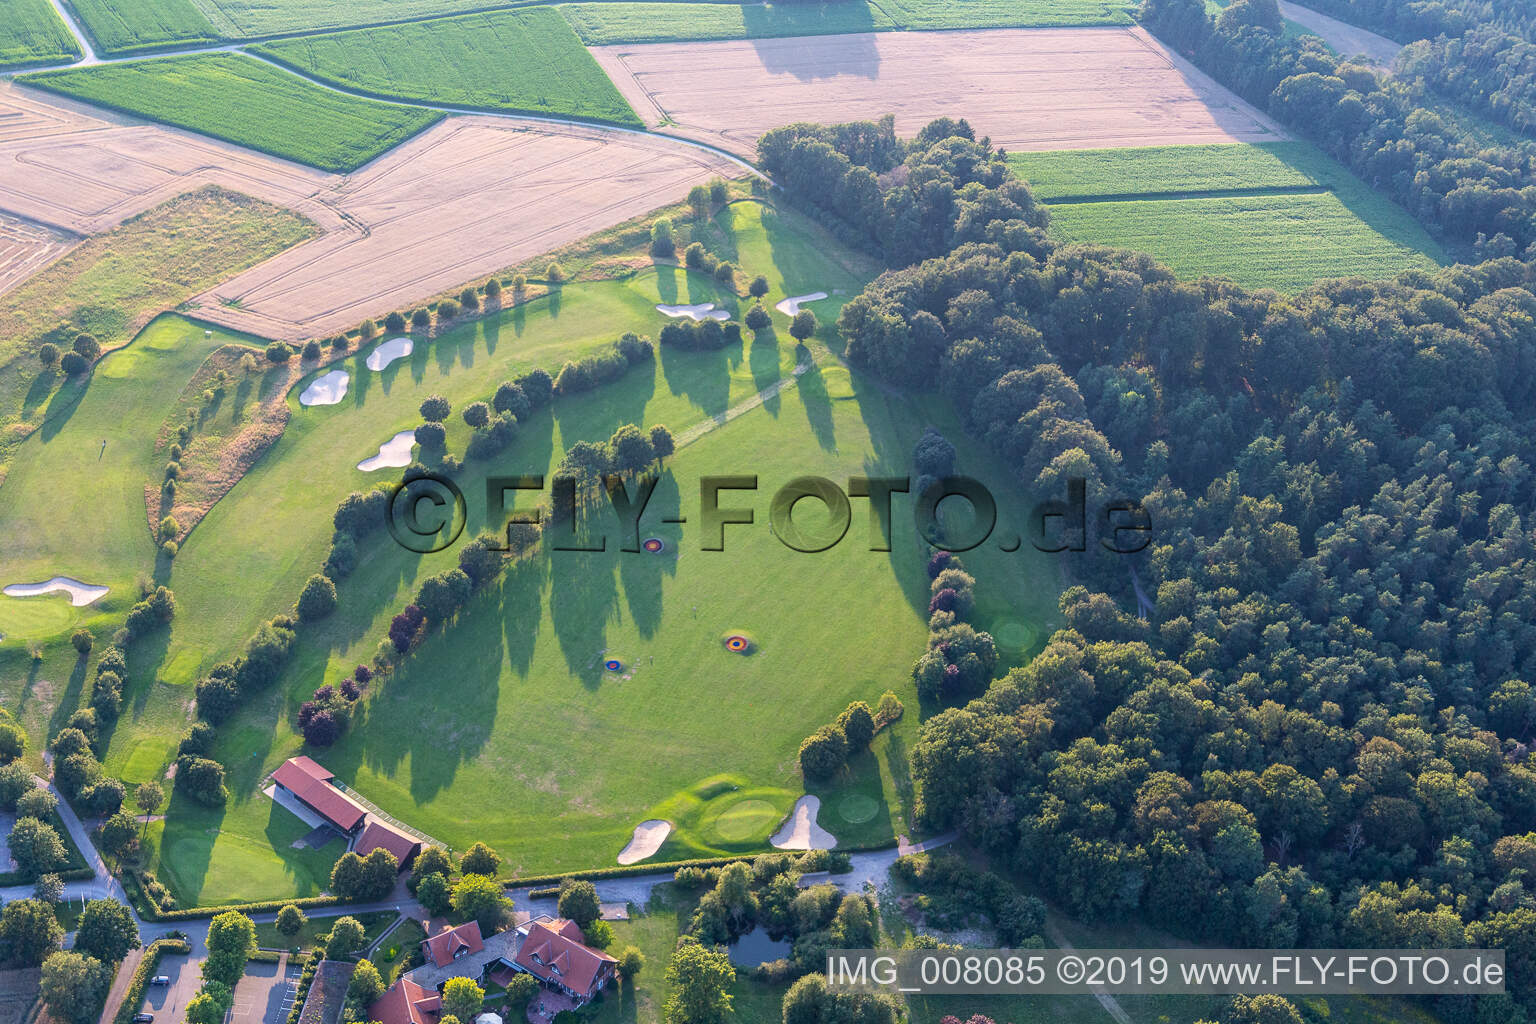 Golf and Country Club Coesfeld eV in Coesfeld in the state North Rhine-Westphalia, Germany from above